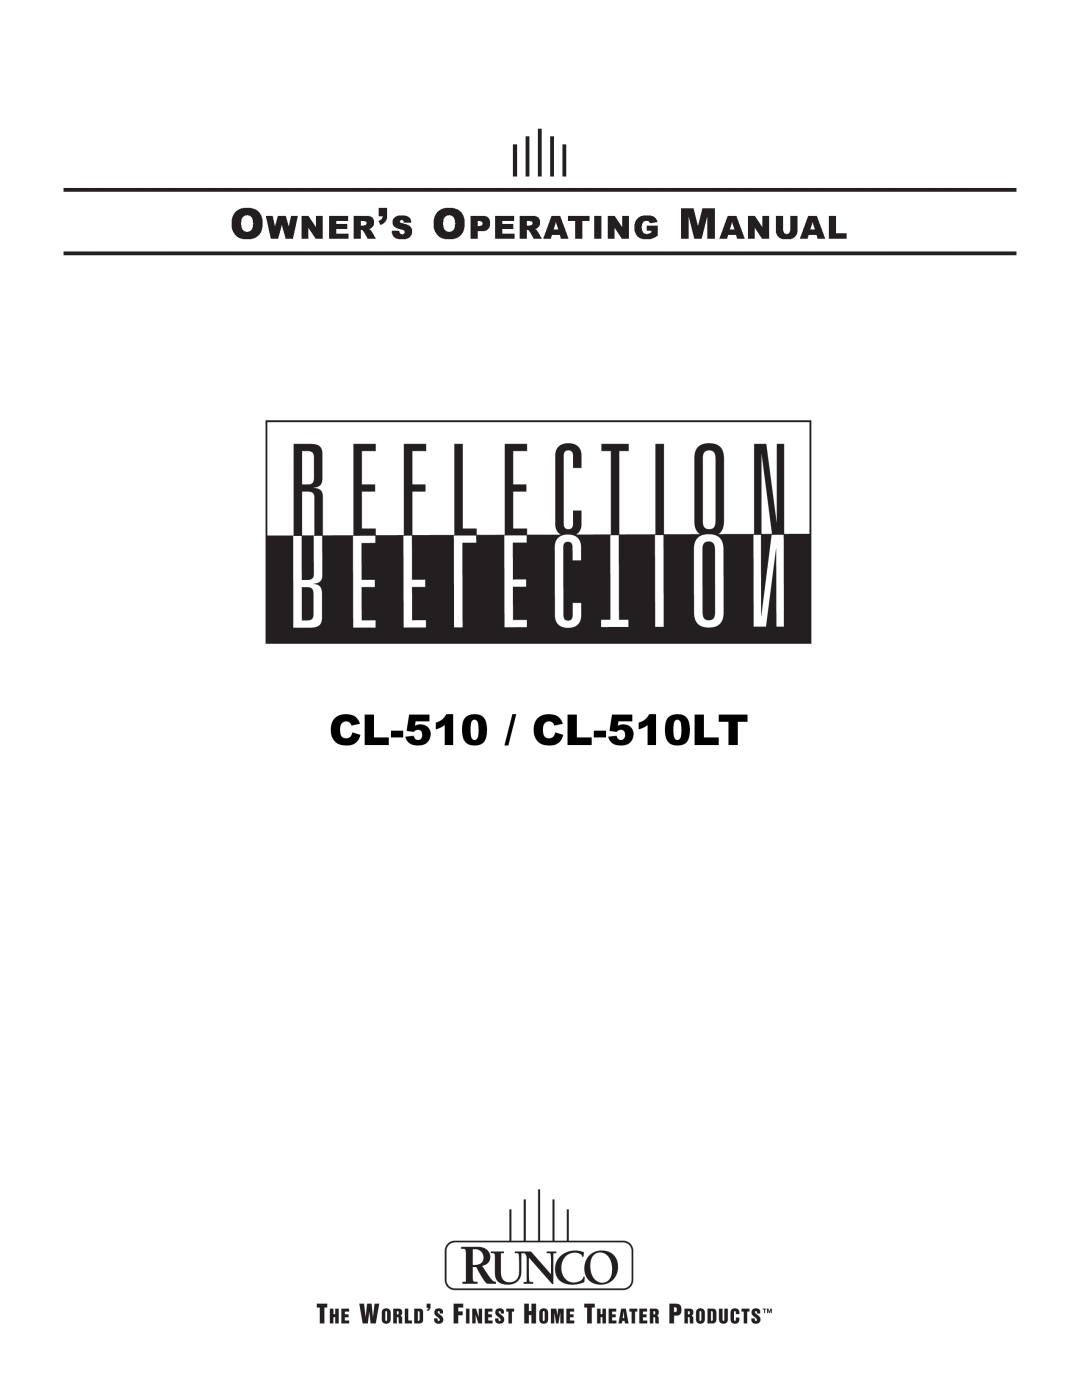 Runco manual CL-510 / CL-510LT, Owner’S Operating Manual 